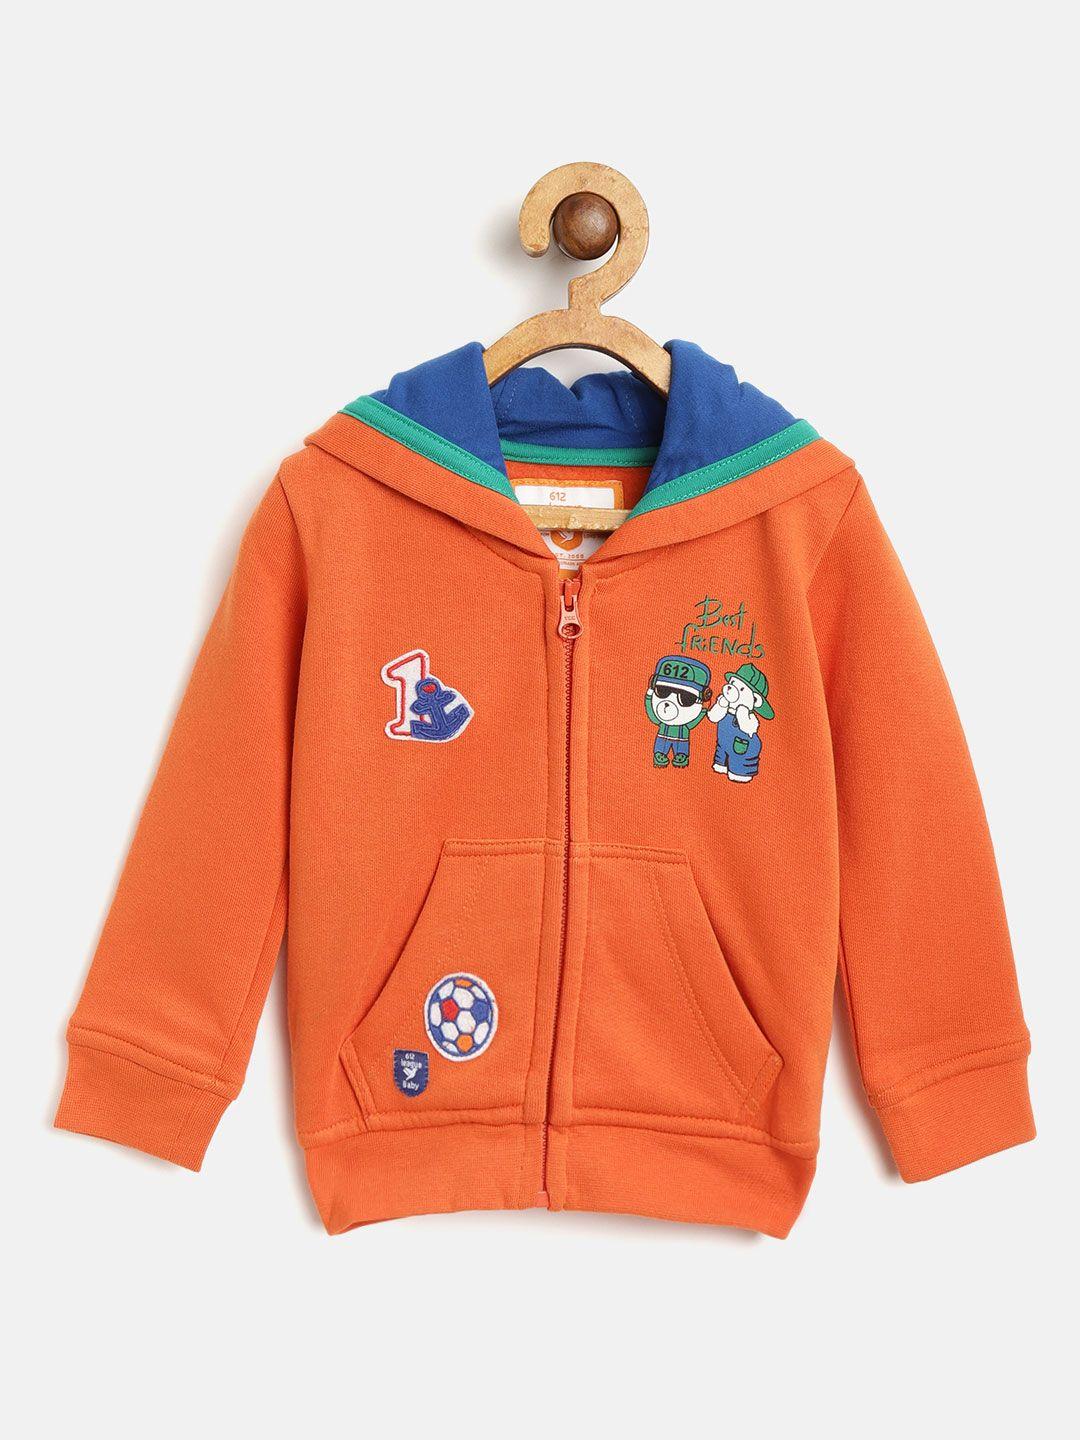 612-league-boys-orange-applique-detail-hooded-sweatshirt